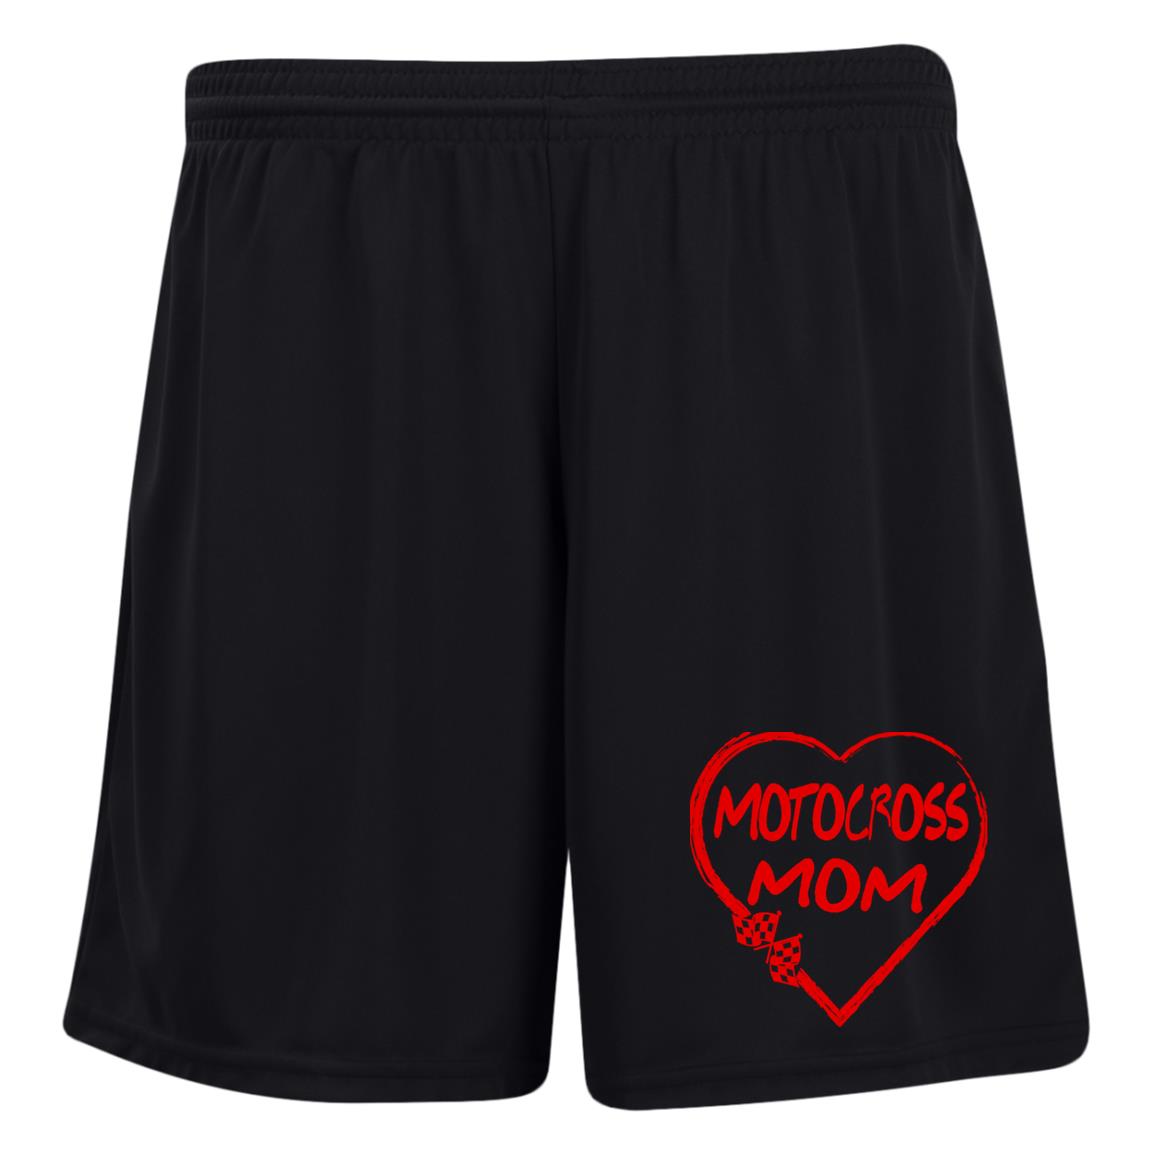 Motocross Mom Heart Ladies' Moisture-Wicking 7 inch Inseam Training Shorts